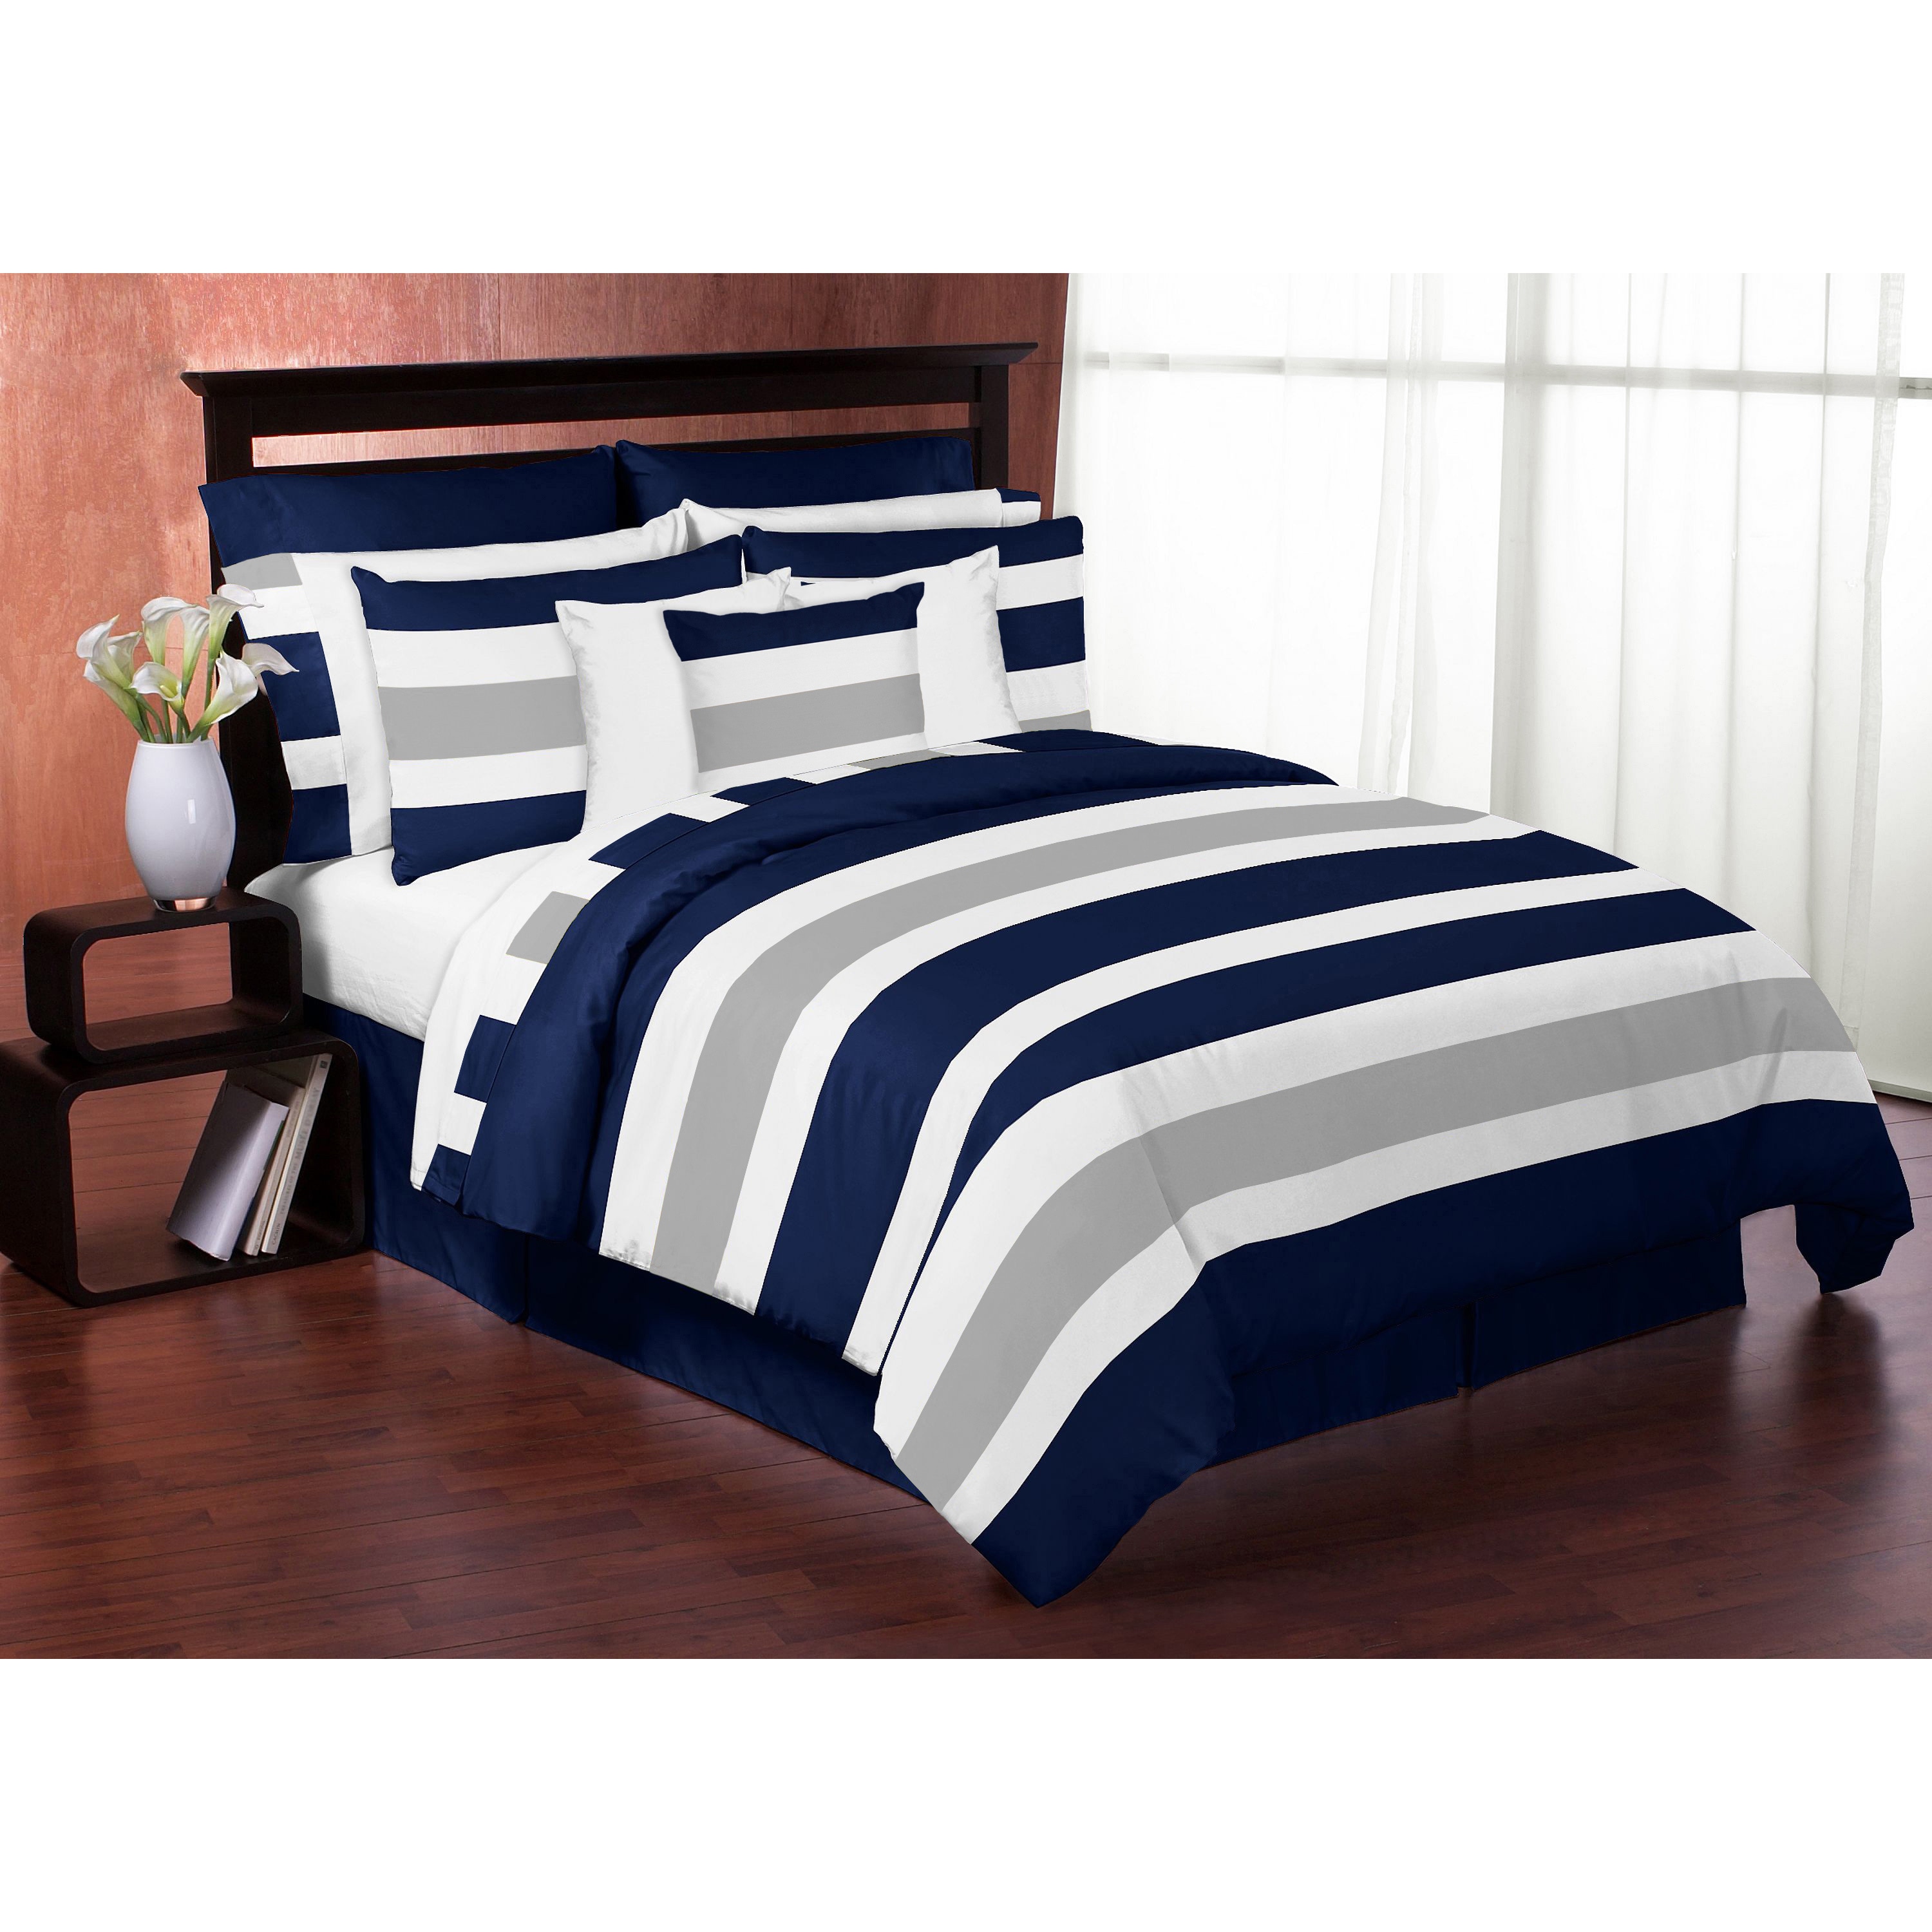 navy blue bedding